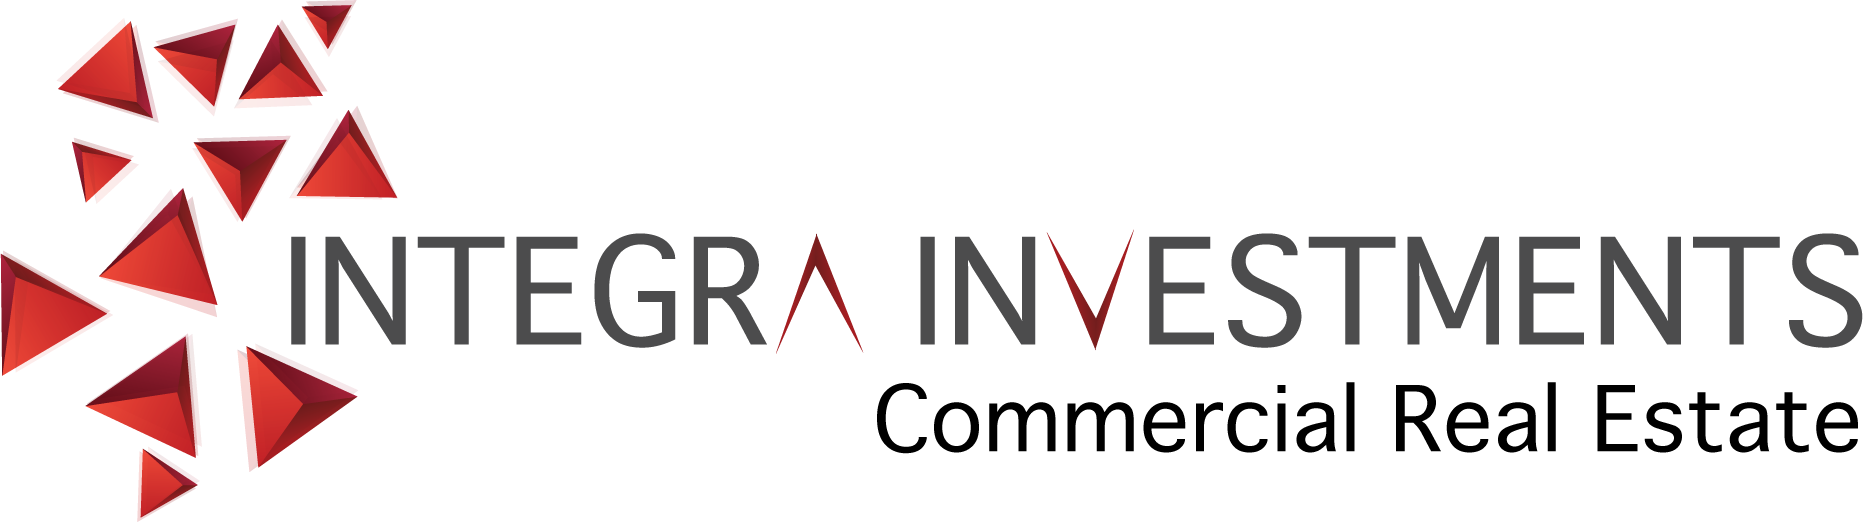 Integra Real Estate Investments logo